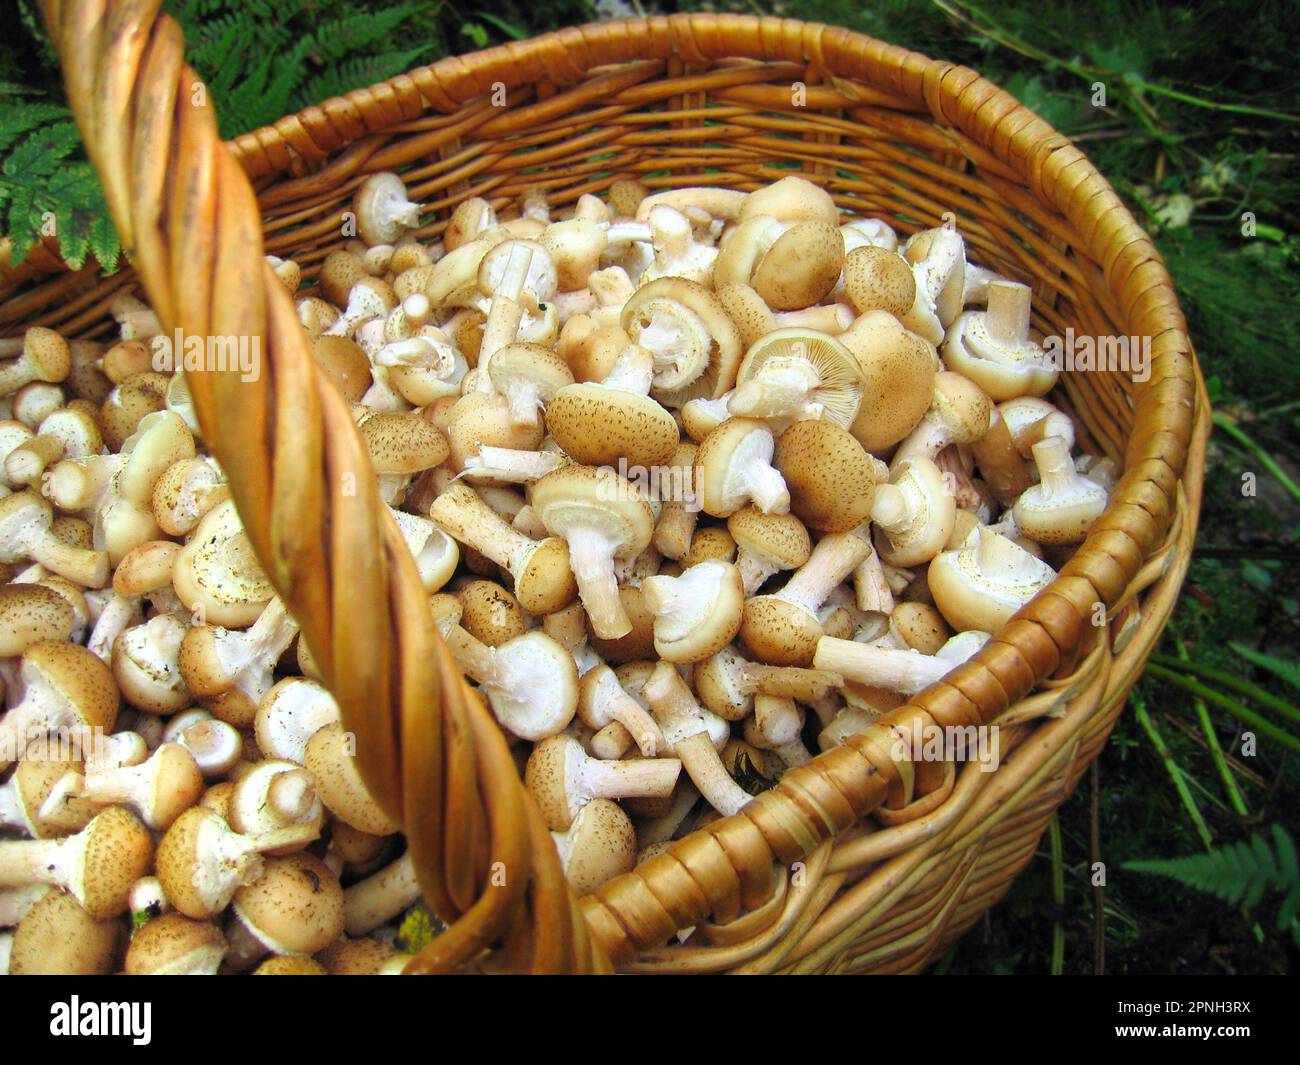 Panier de champignons, agarics de miel Banque D'Images